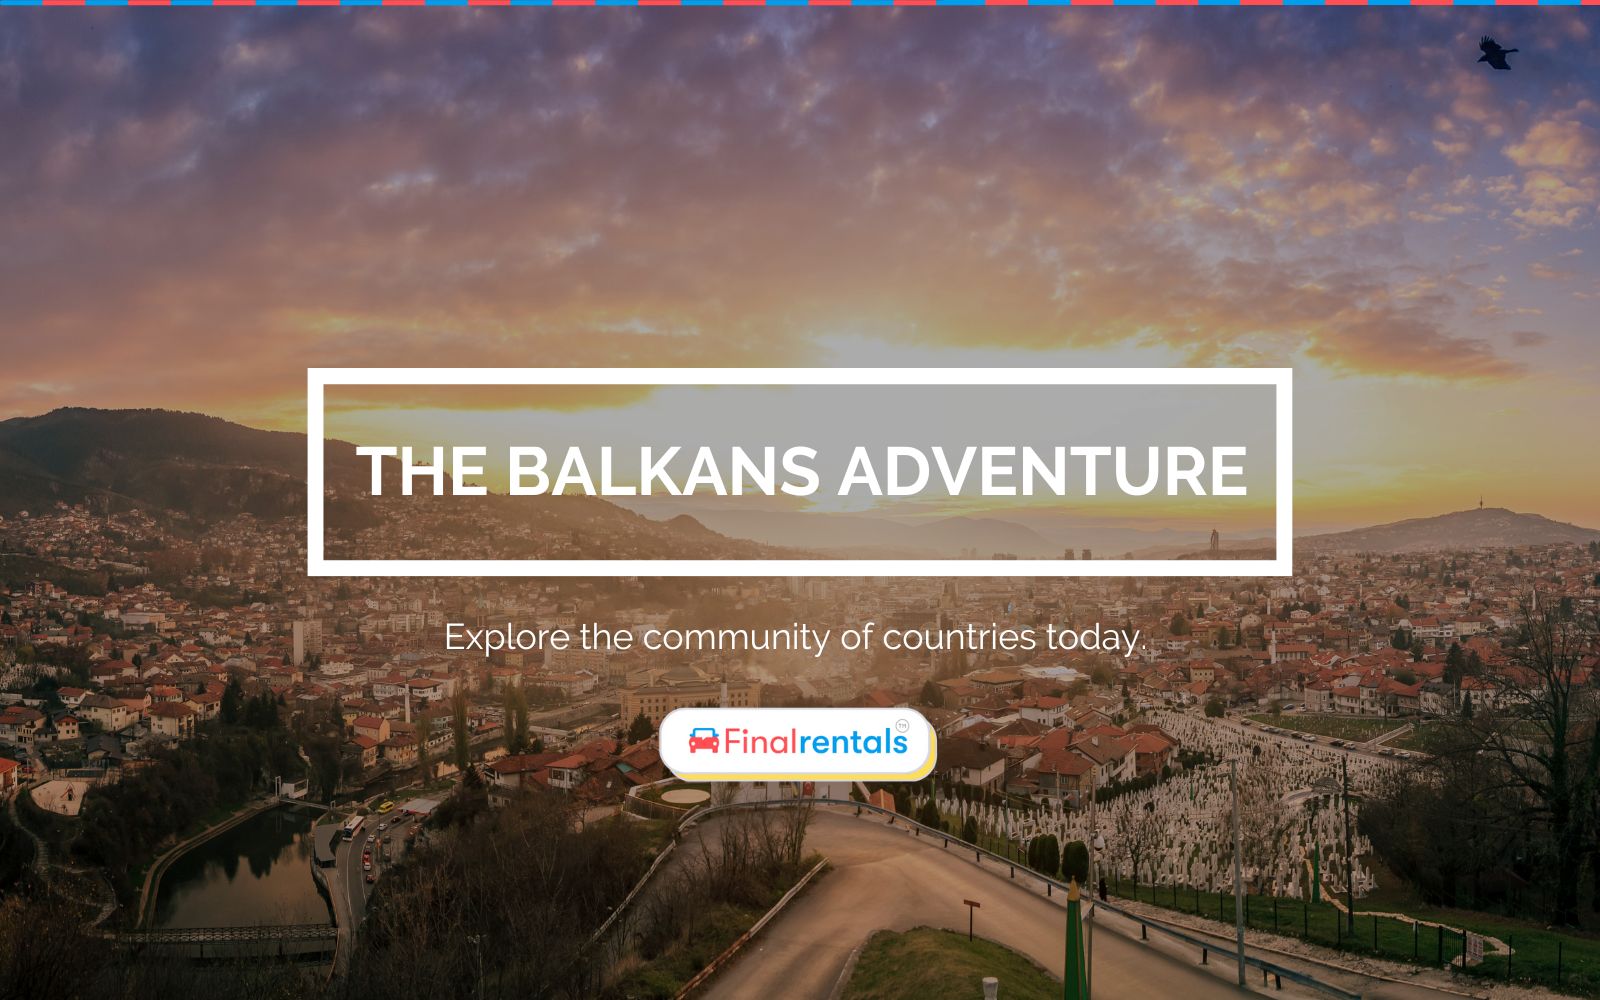 The Balkans Adventure